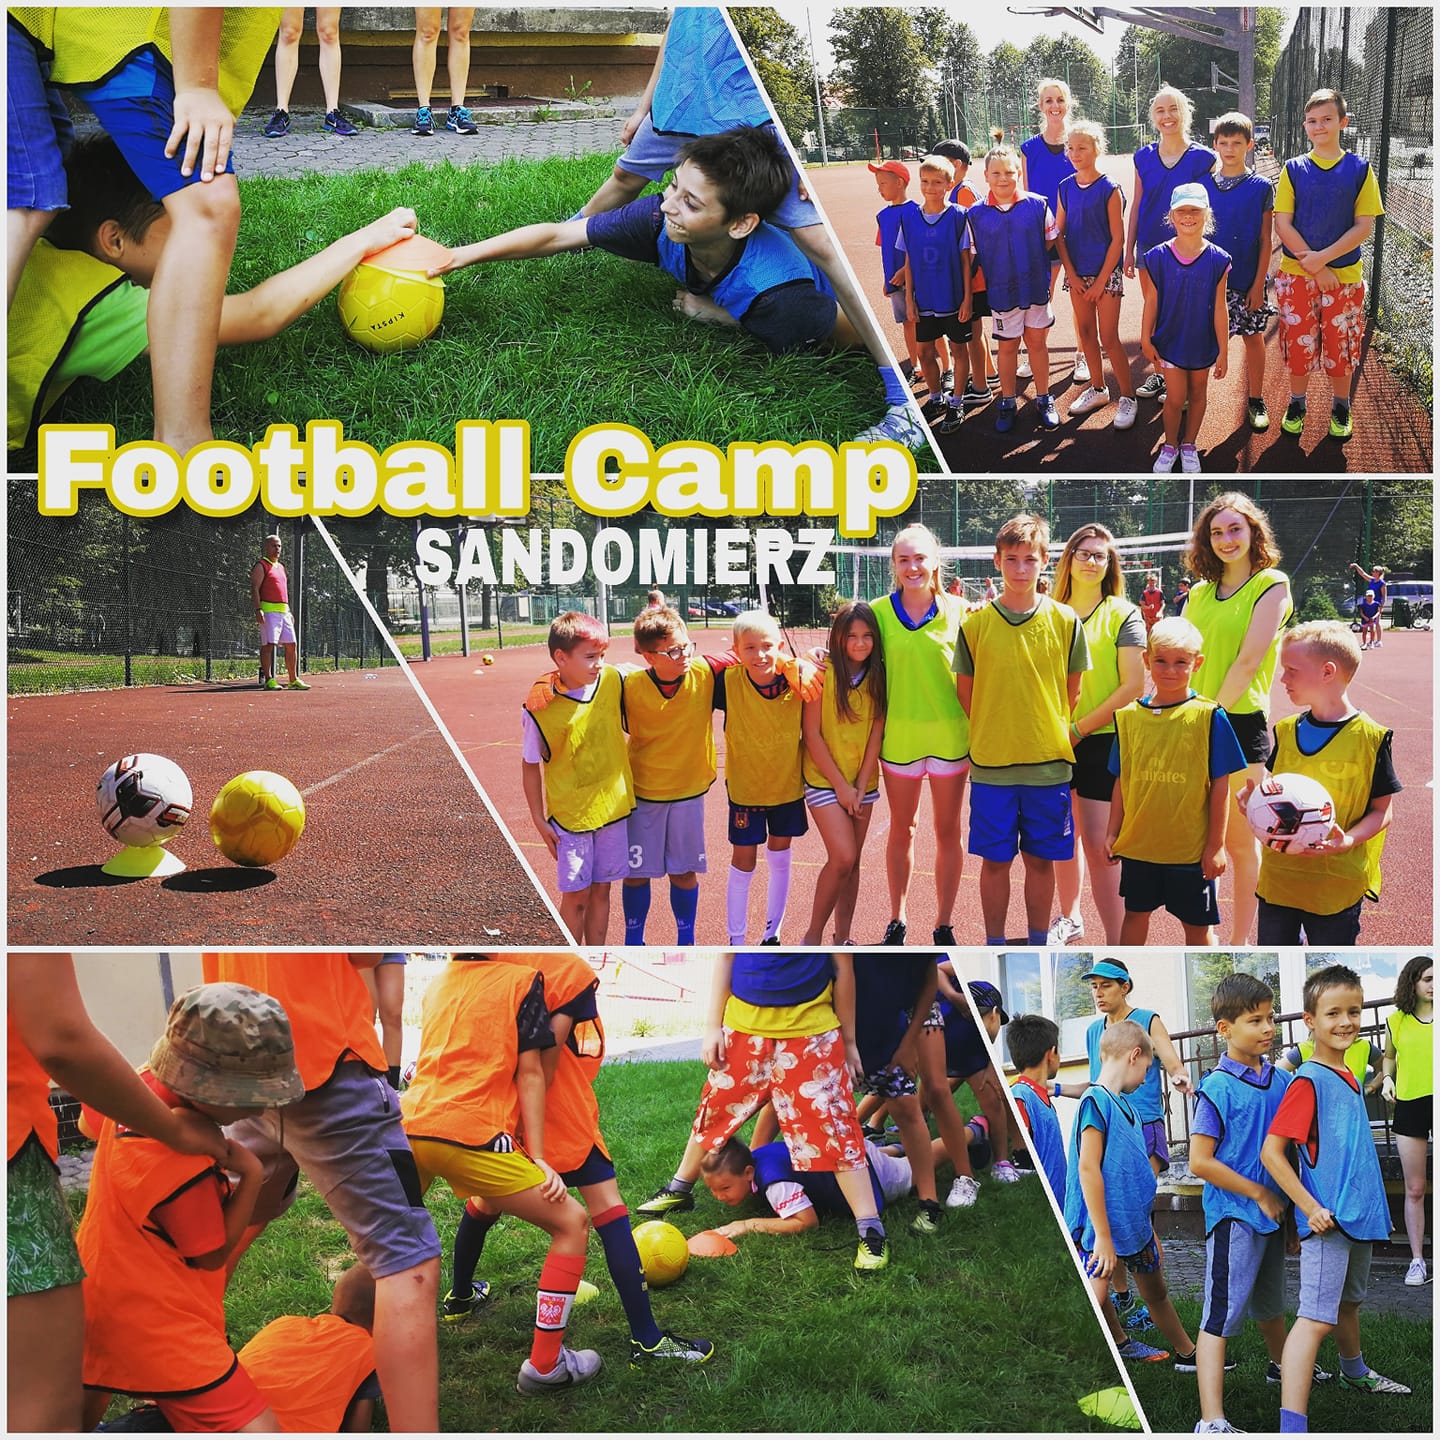 Football camp – Sandomierz